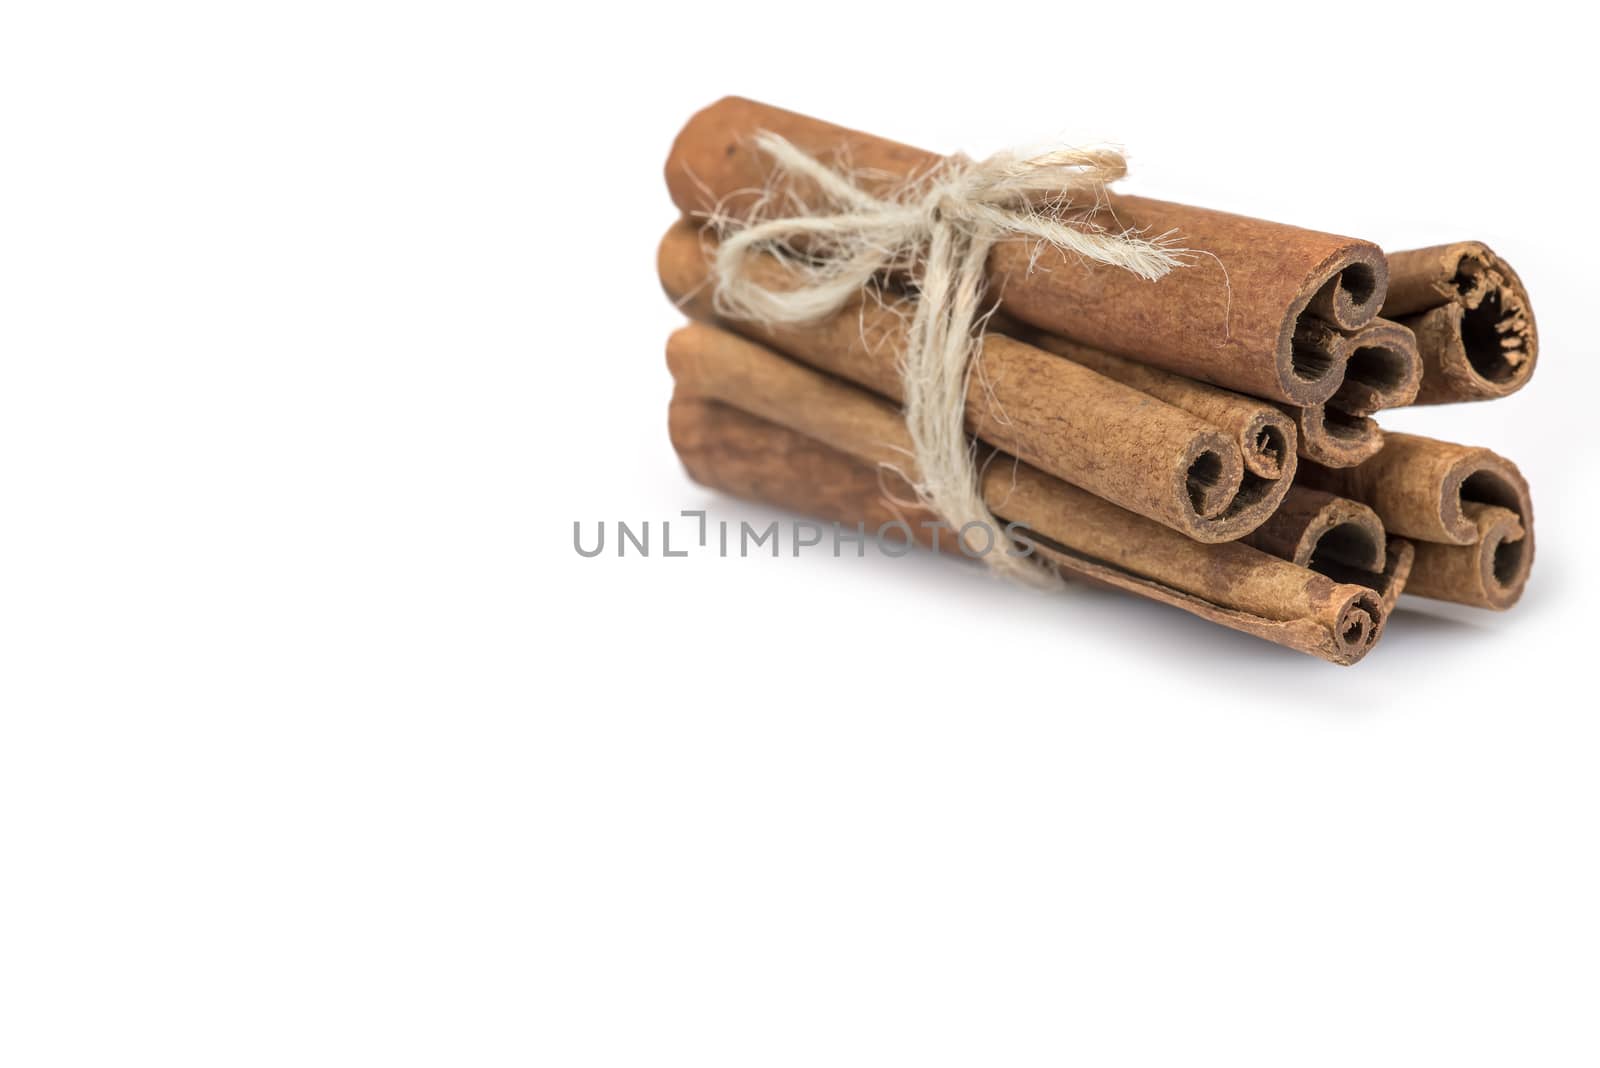 Bunch of cinnamon sticks by angelsimon